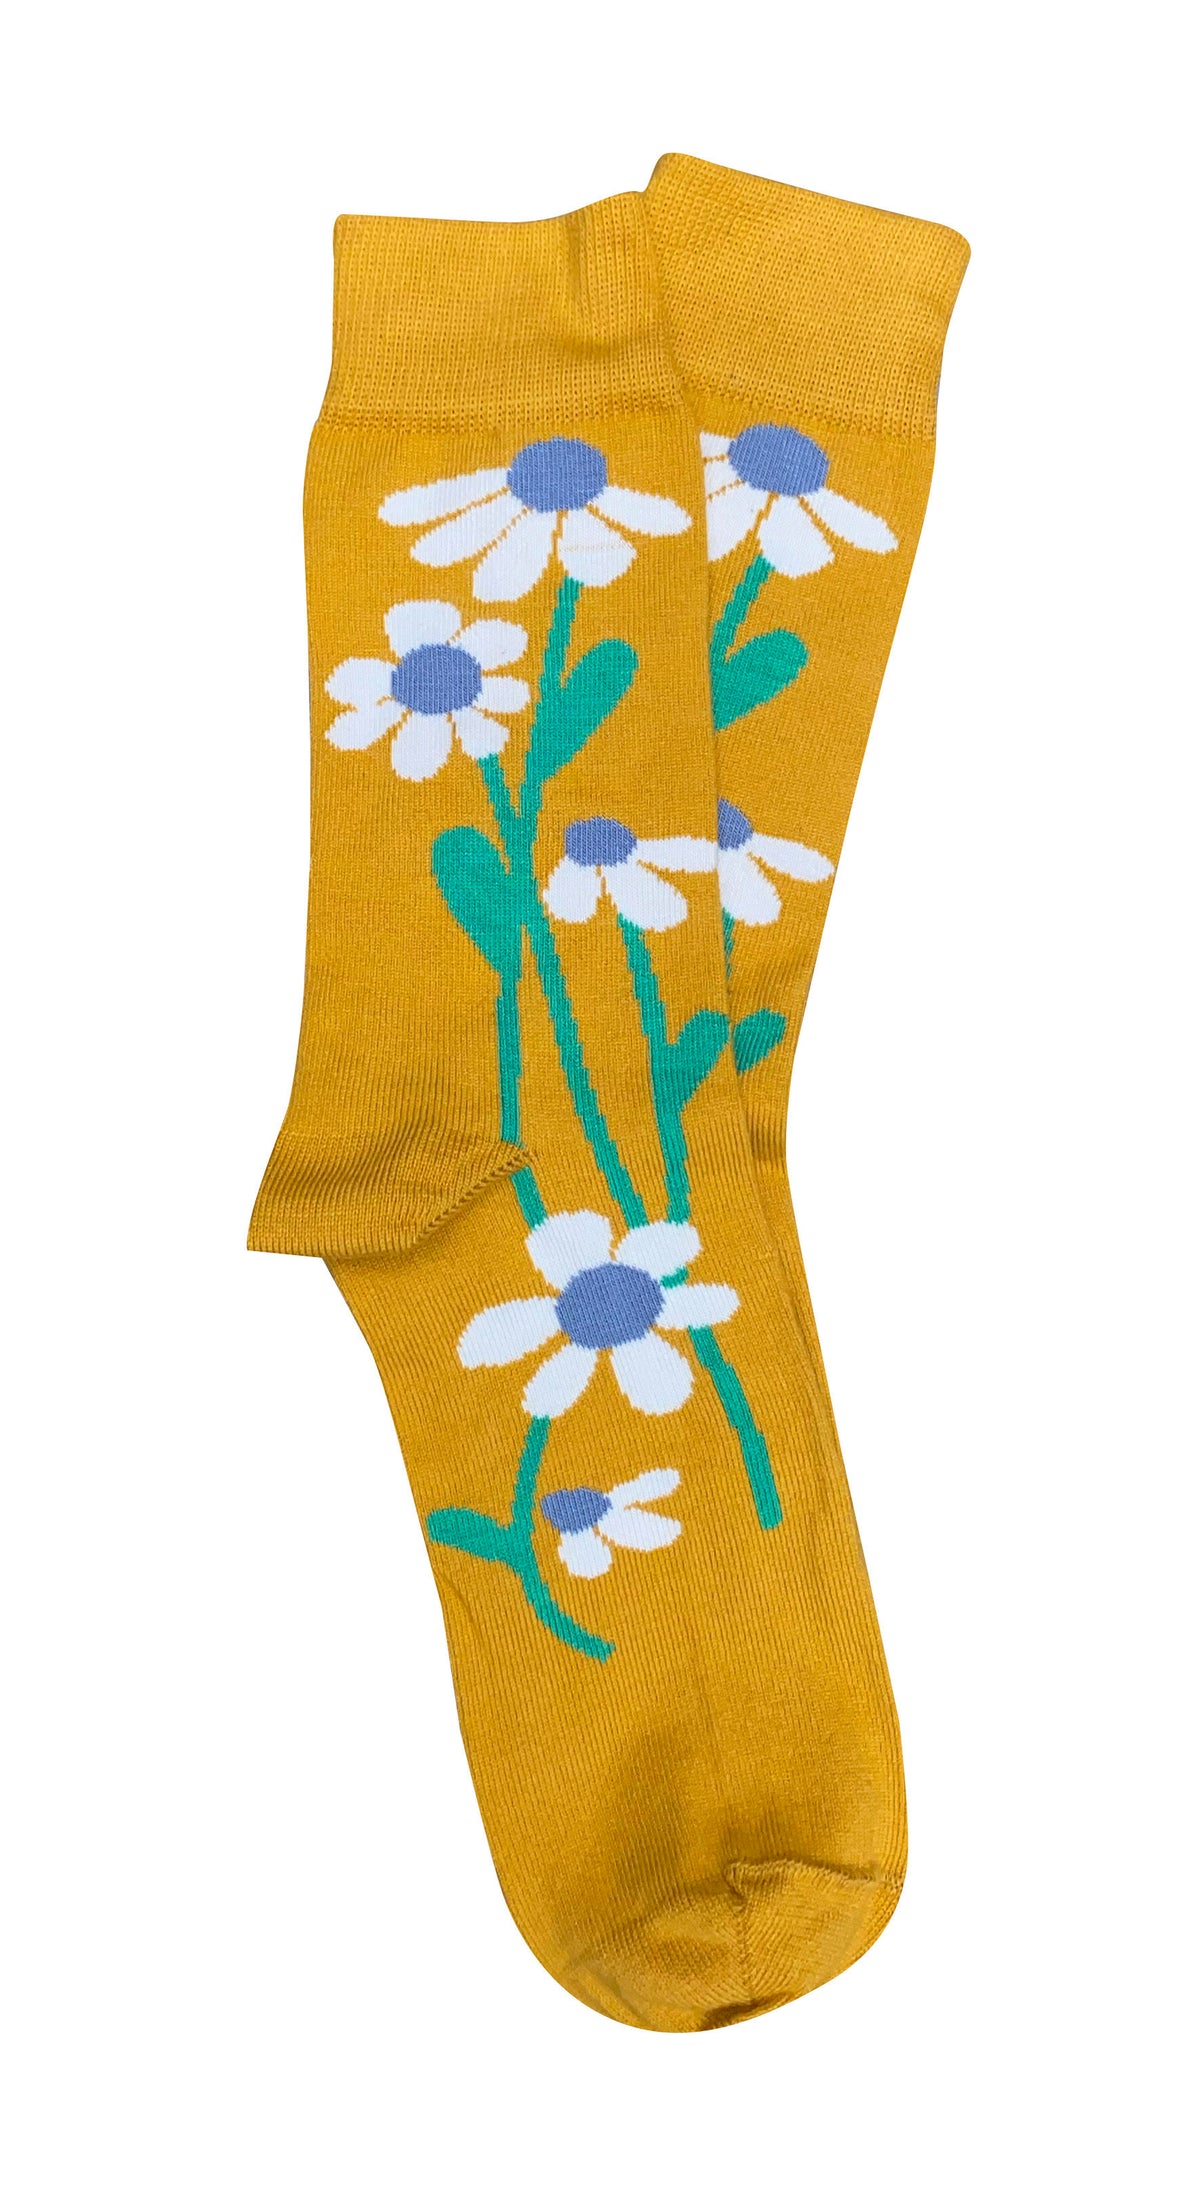 Tightology – Daisy Cotton Socks in Mustard